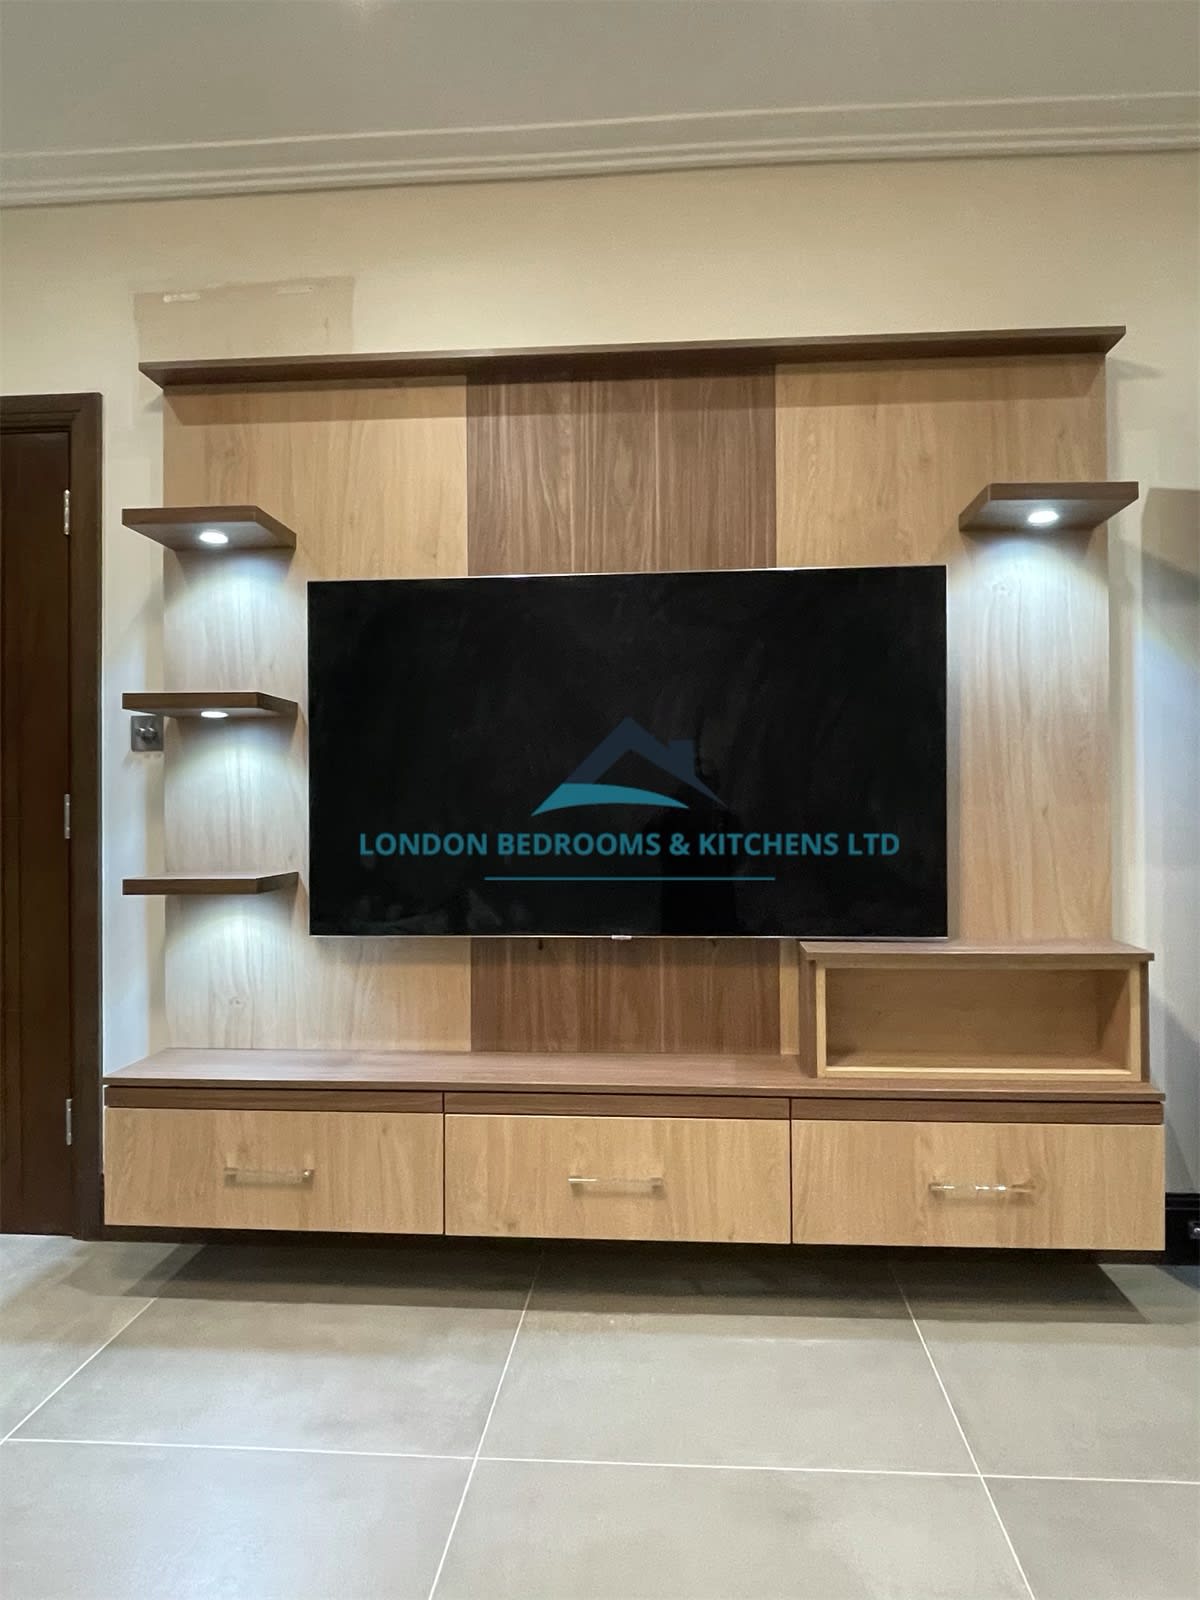 Images London Bedrooms & Kitchens Ltd